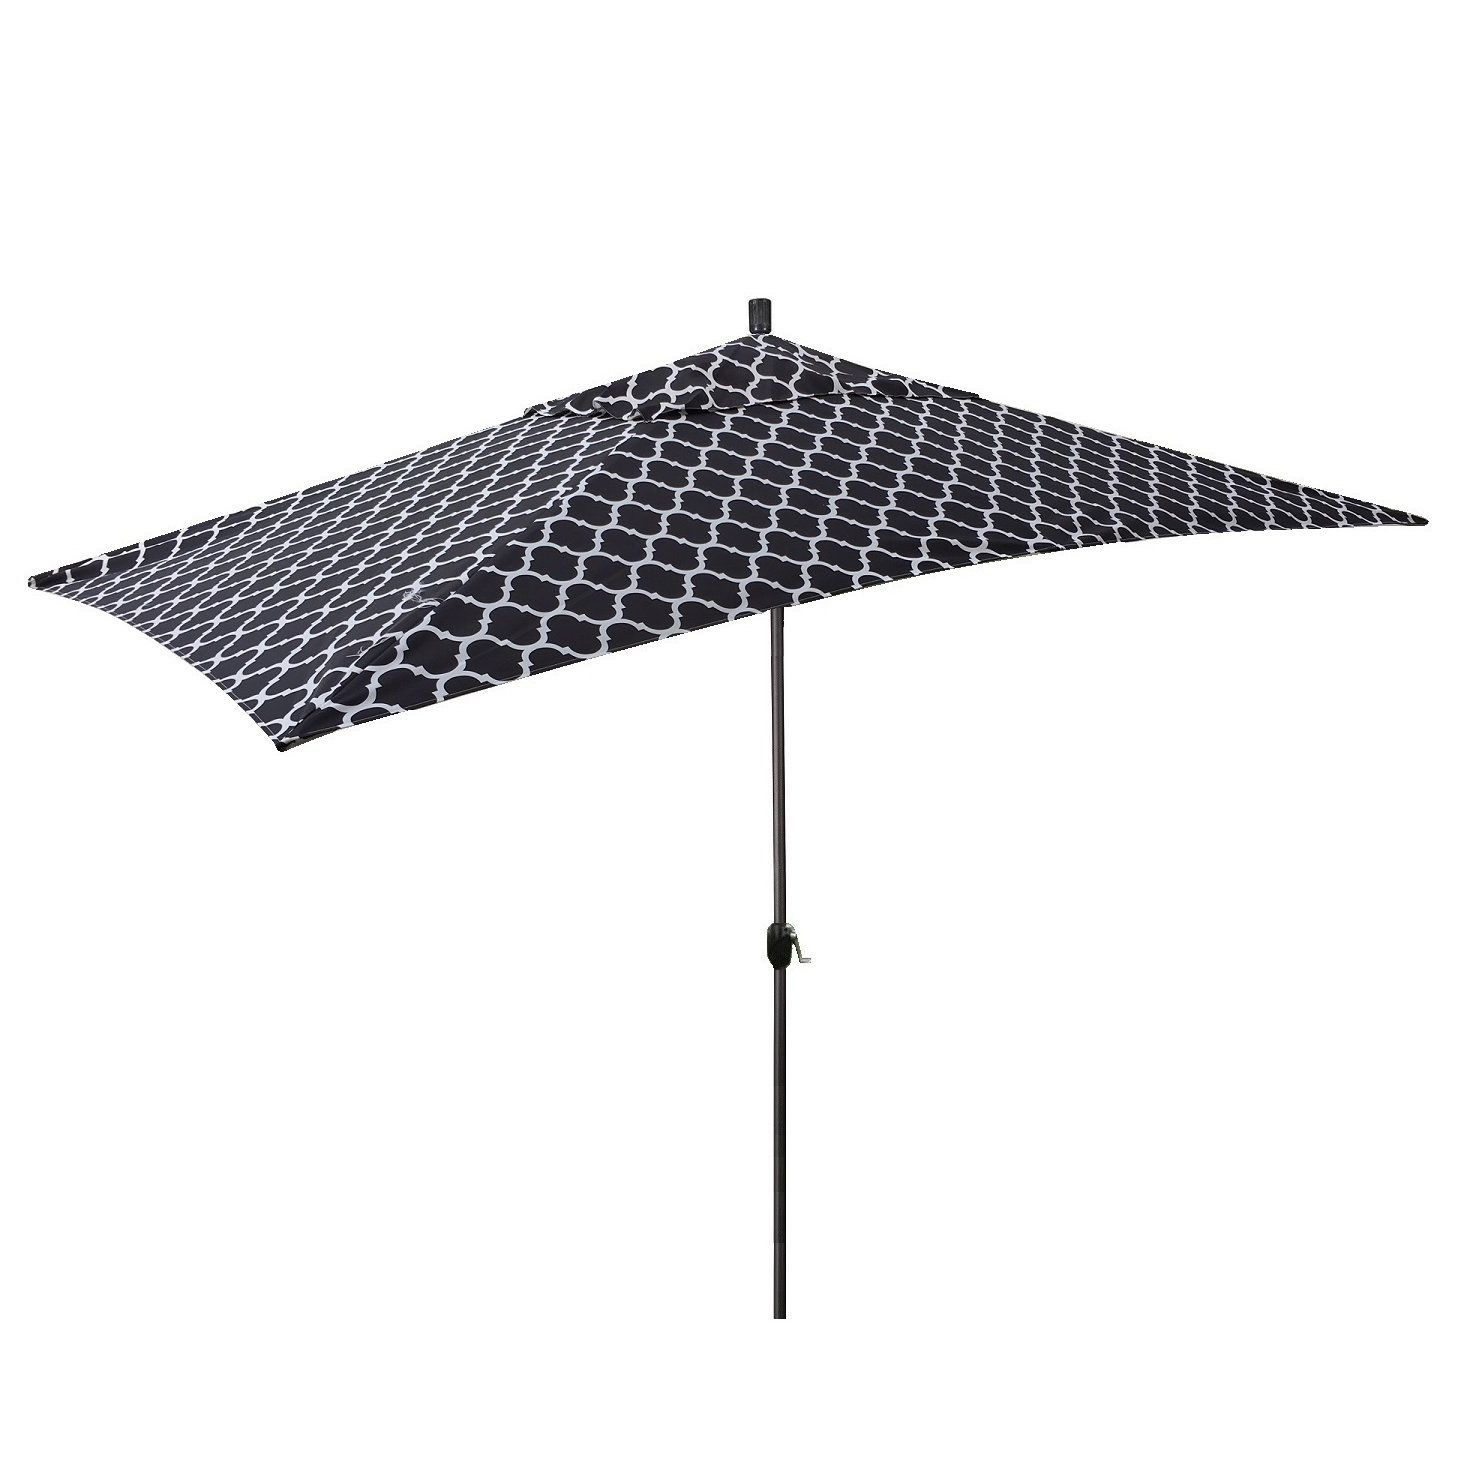 2020 Dena Rectangular Market Umbrellas With Sherlyn 10' X 6' Rectangular Market Umbrella (View 11 of 20)